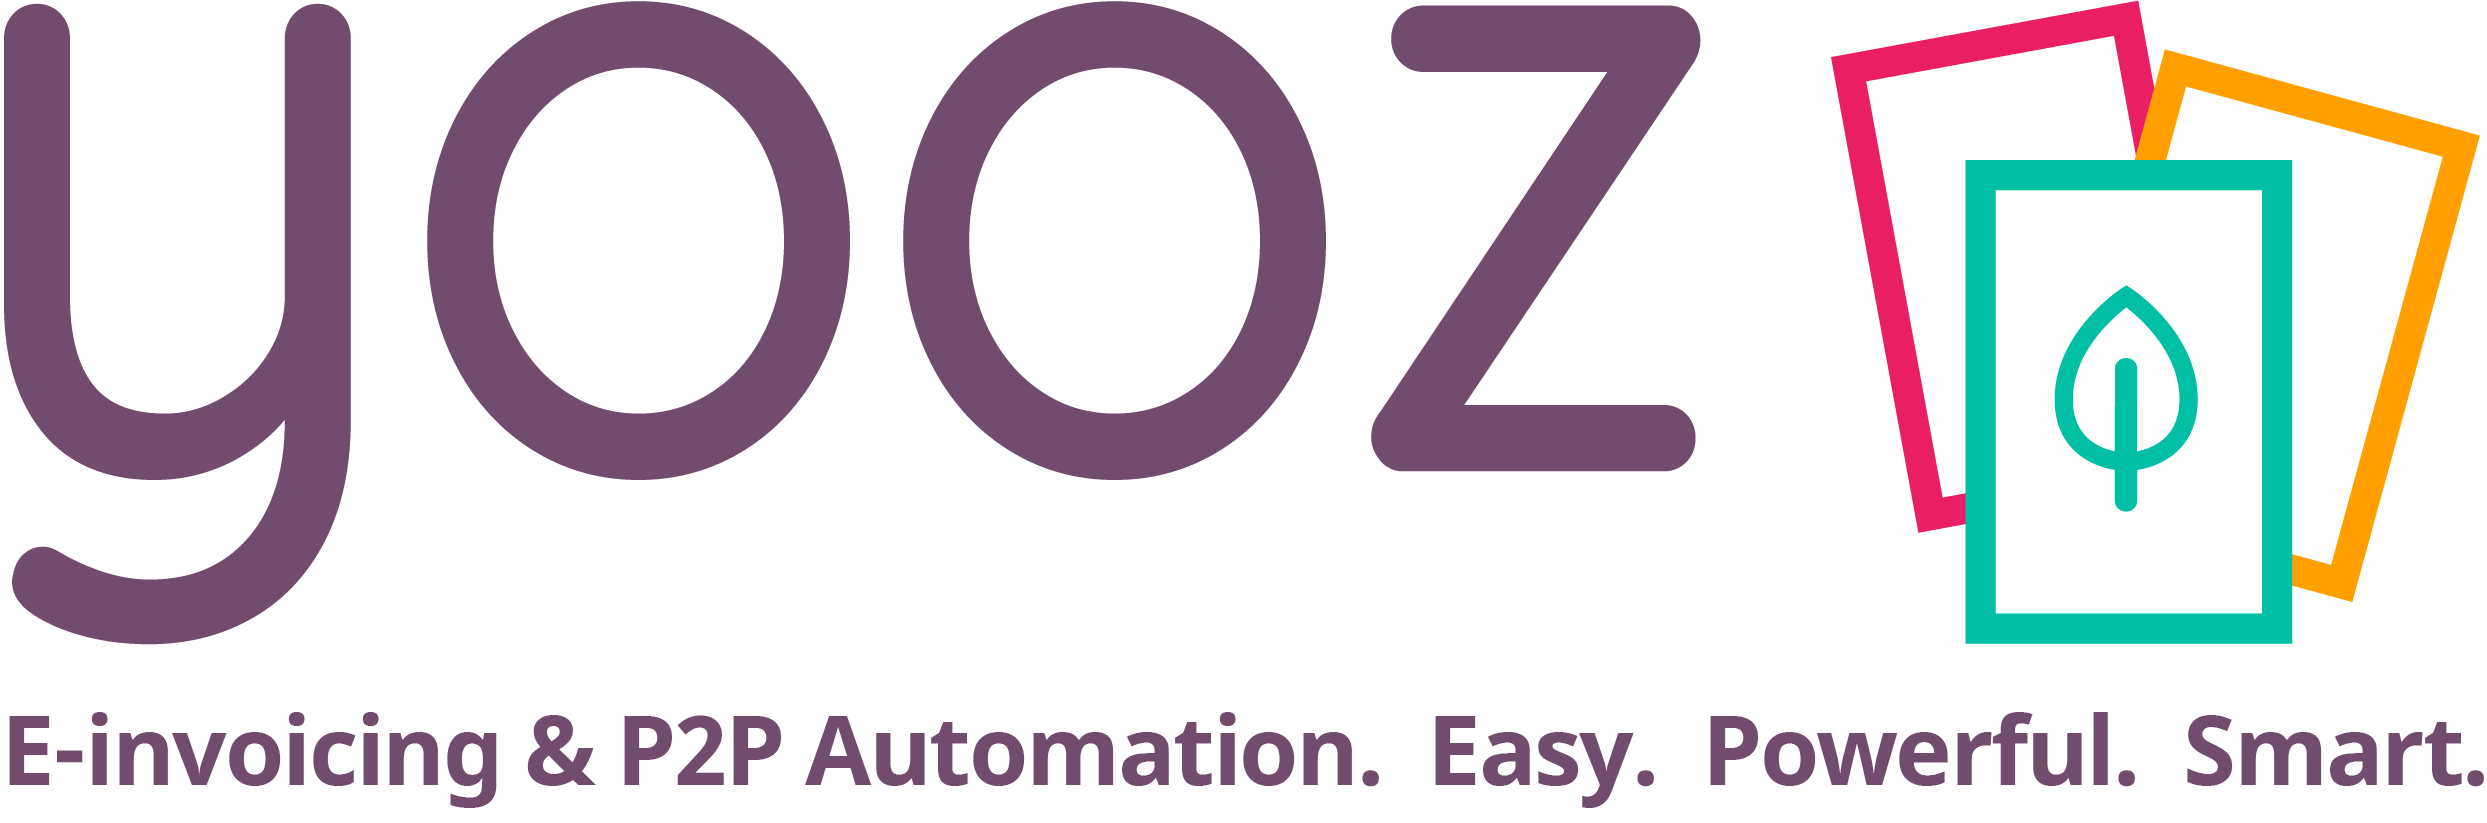 Yooz-2018_Logo-Colors